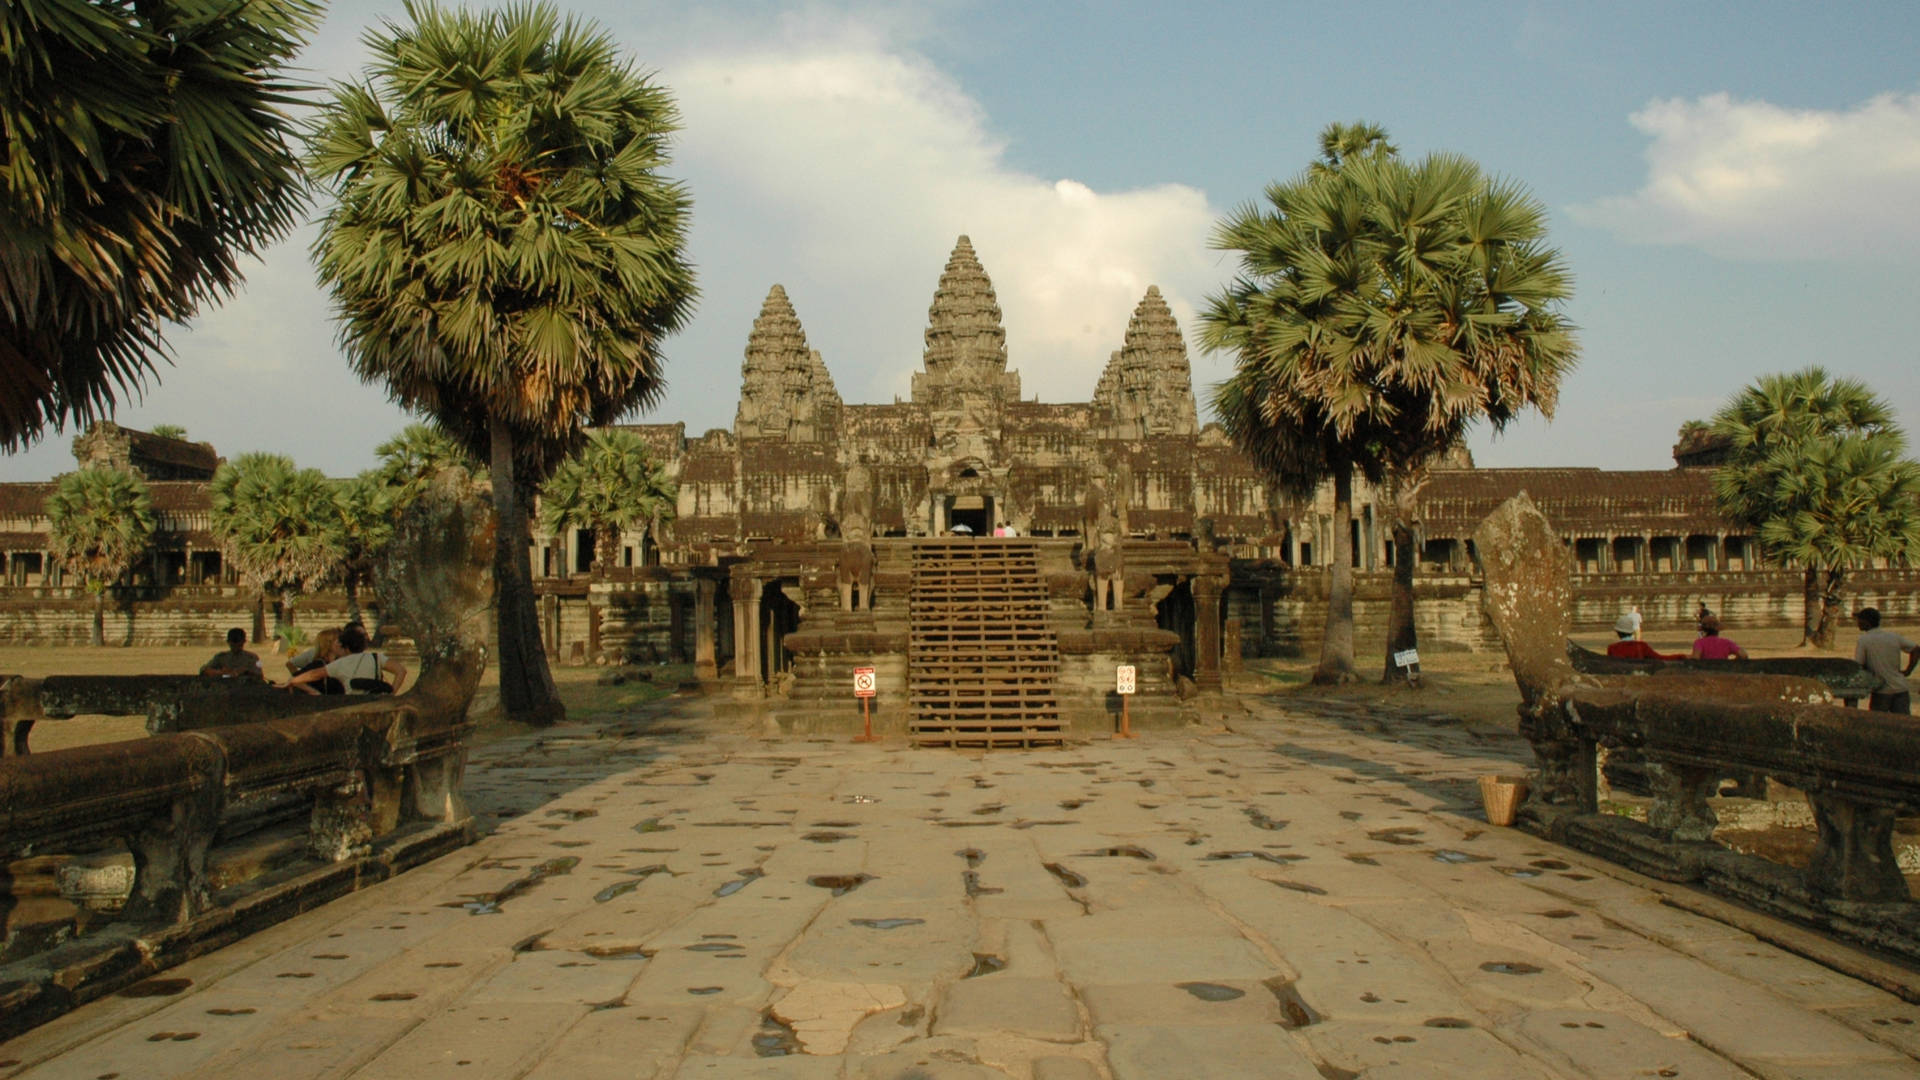 Angkor Wat 2560 X 1440 Wallpaper